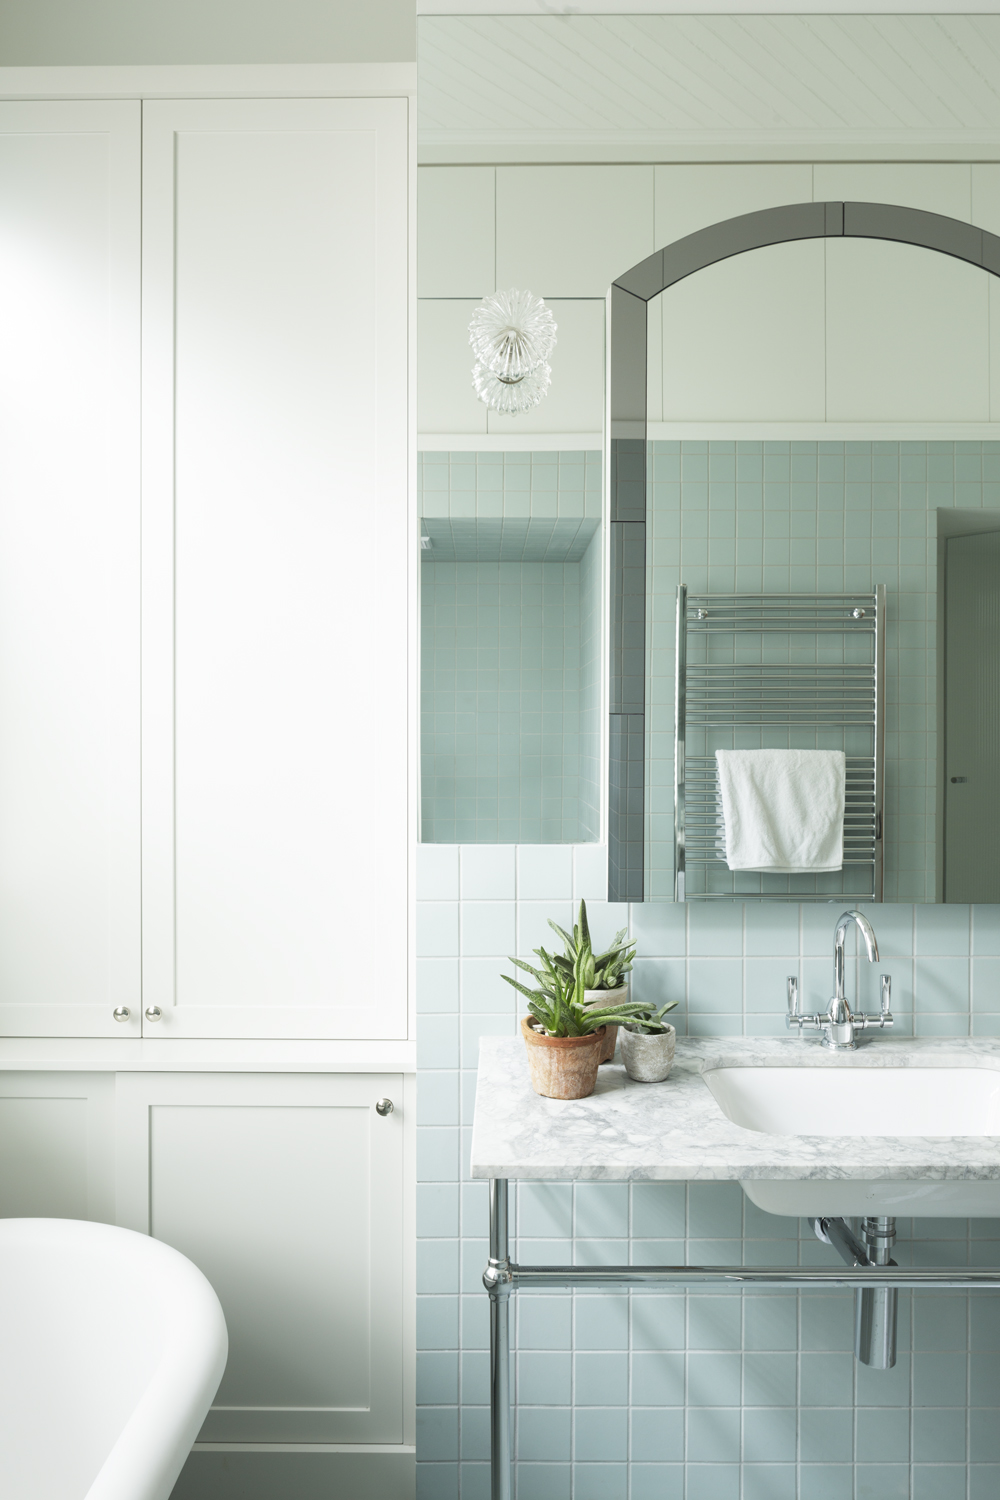 Clifton Hill bathroom design by Melbourne interior designer Meredith Lee